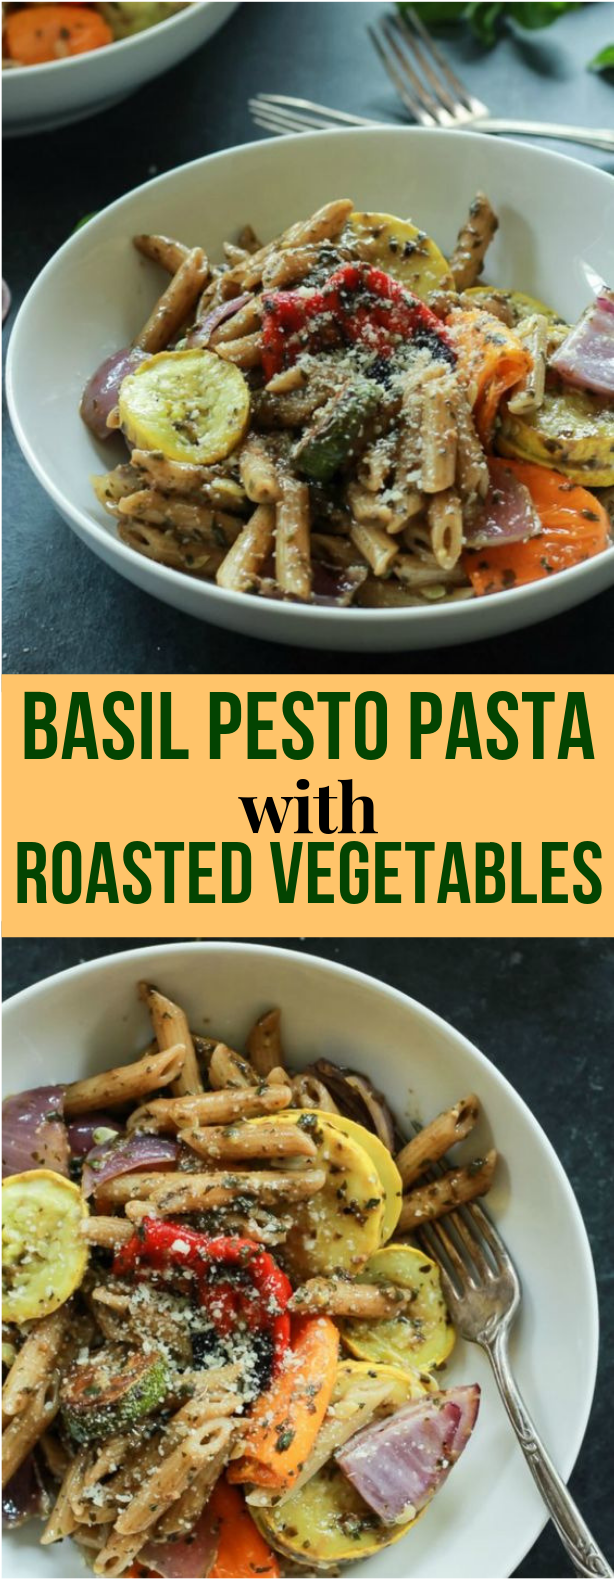 Basil Pesto Pasta with Roasted Vegetables #Vegetarian #Pasta